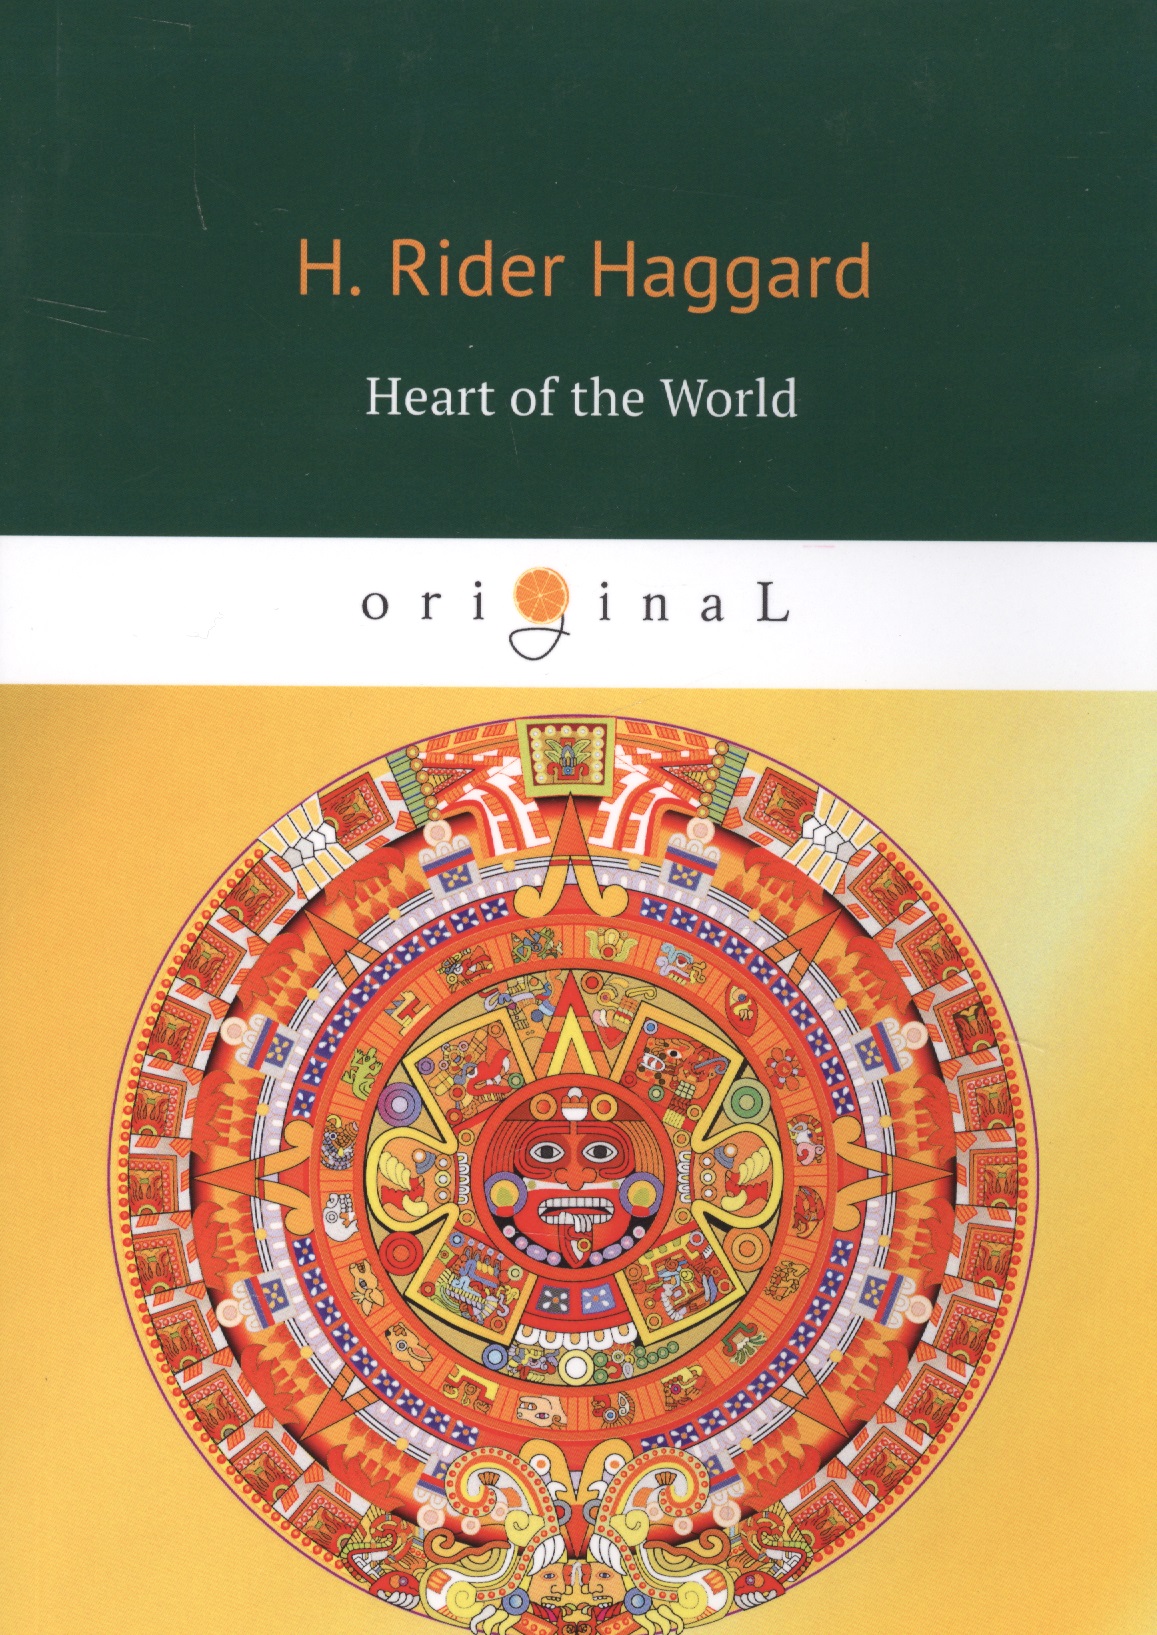 Хаггард Генри Райдер Heart of the World = Сердце мира: на английском языке хаггард генри райдер heart of the world сердце мира на английском языке